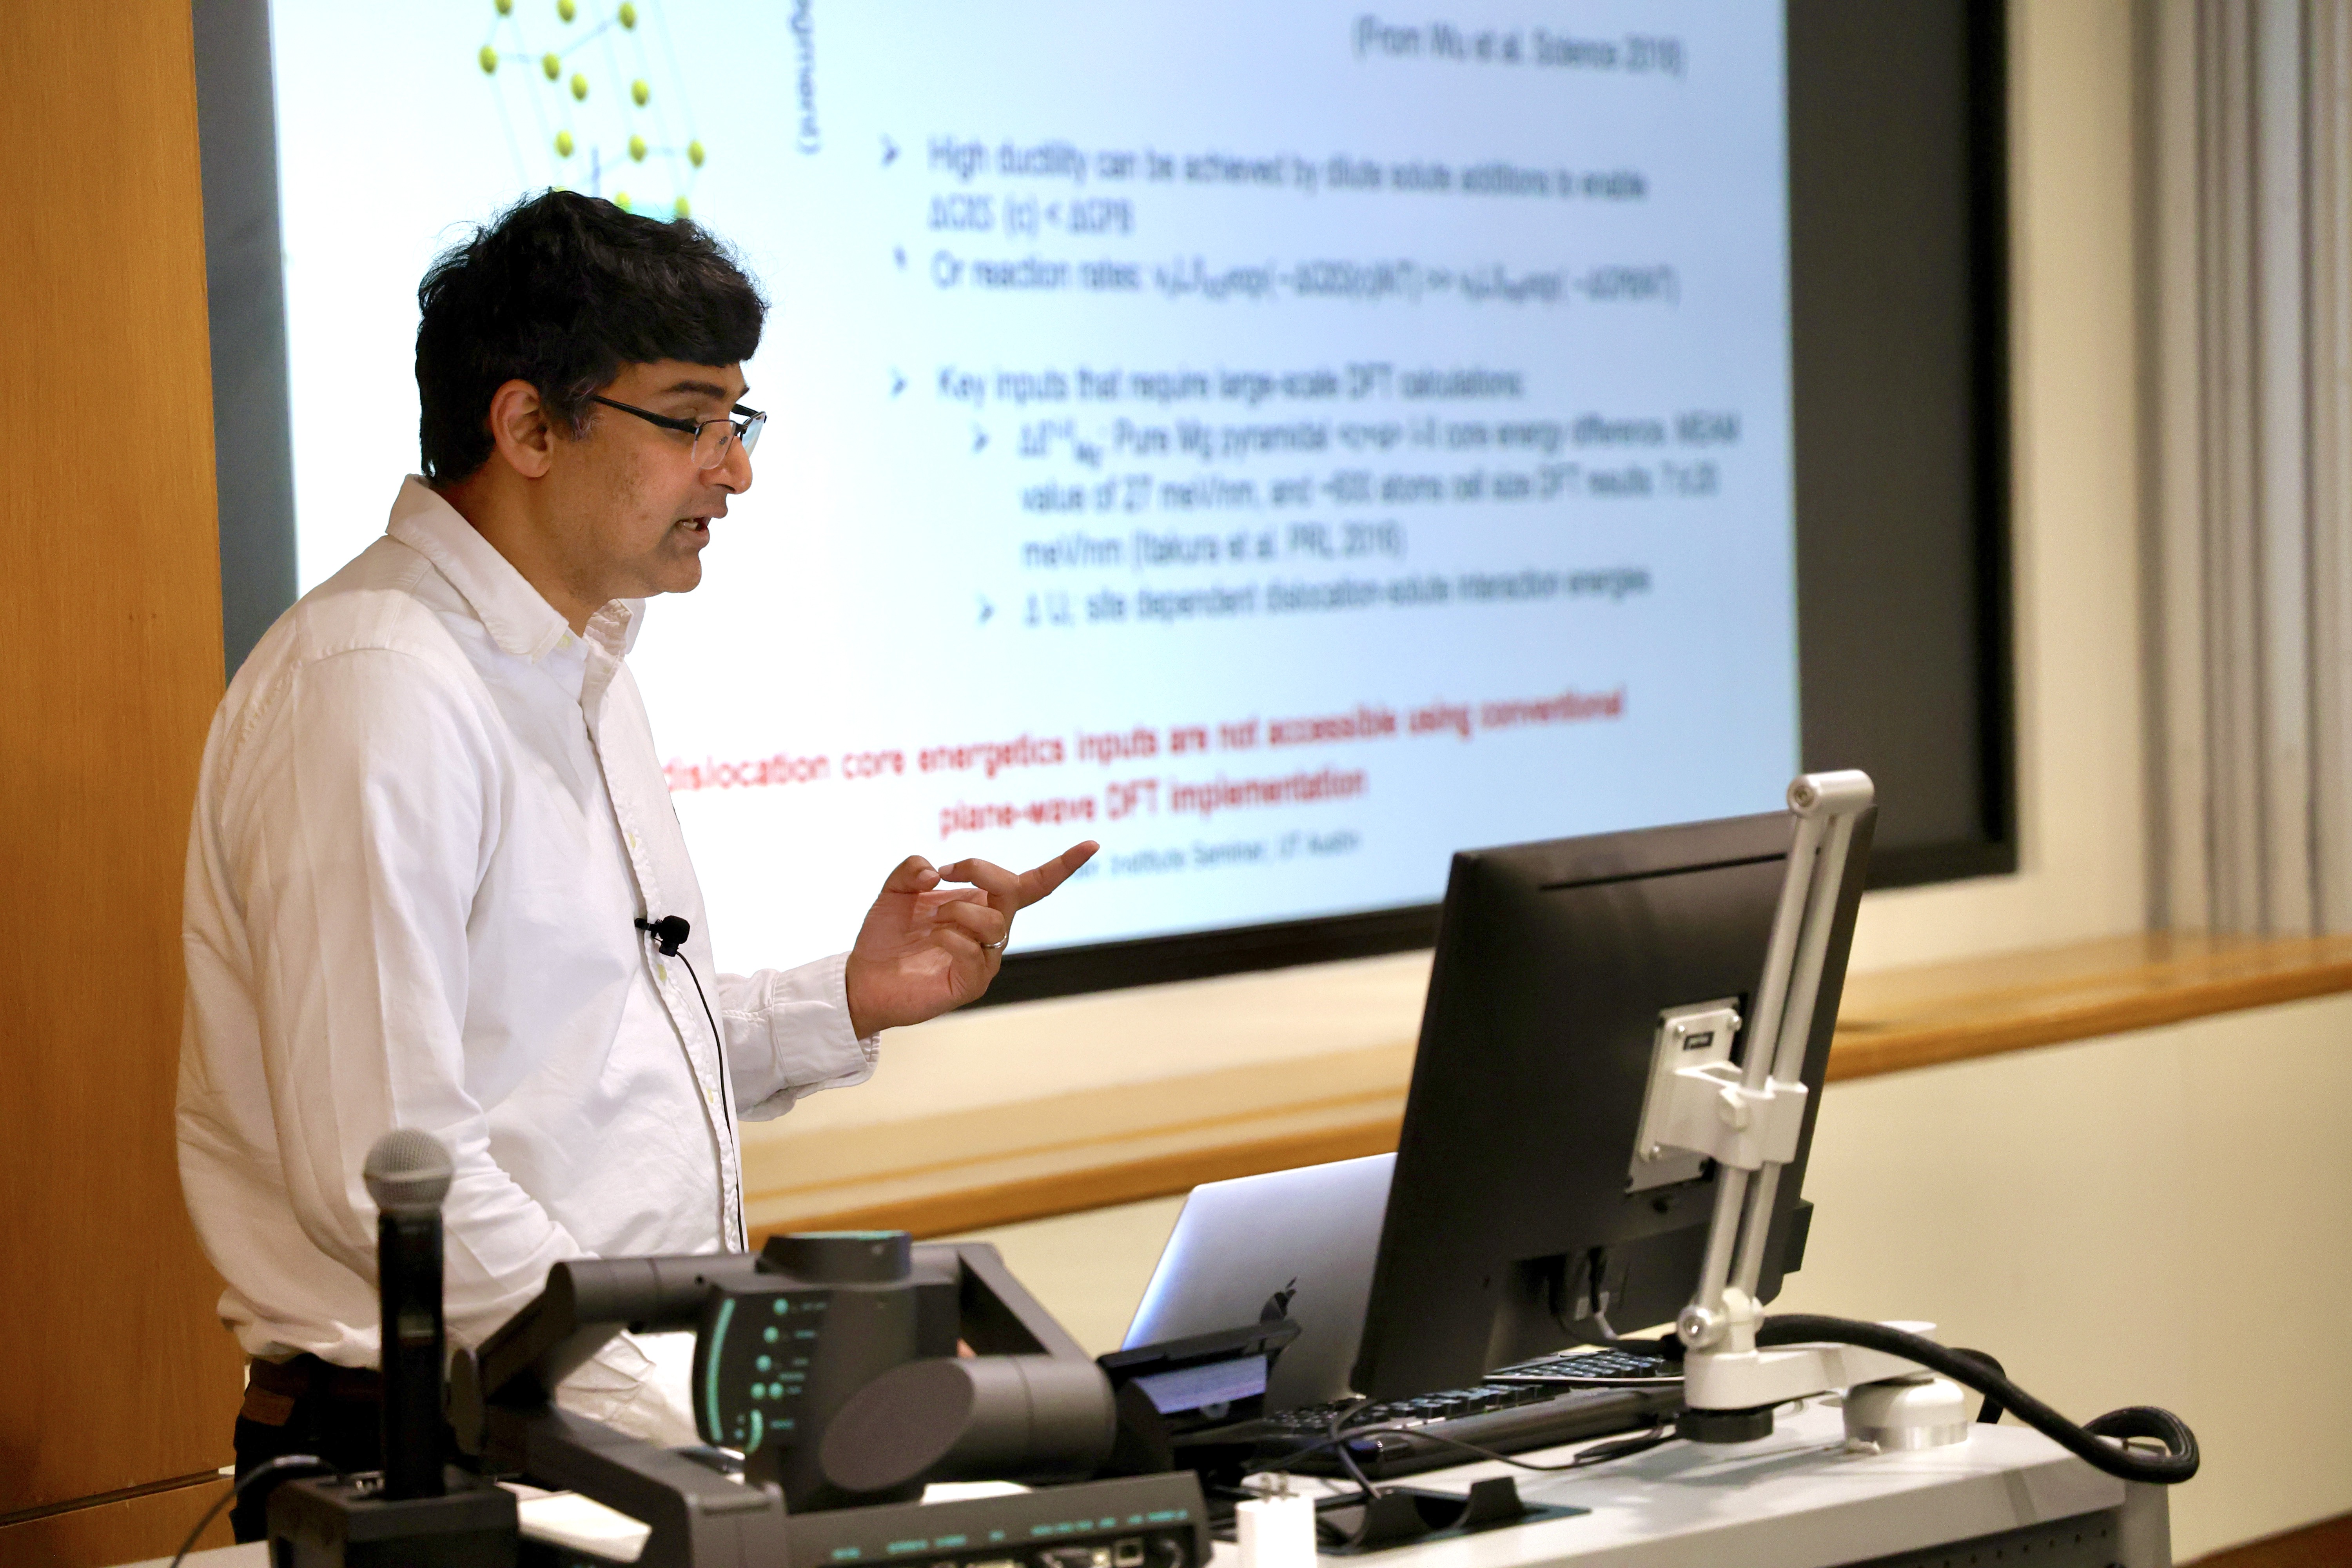 Distinguished Lecturer Vikram Gavini Presents Research on Computational Materials